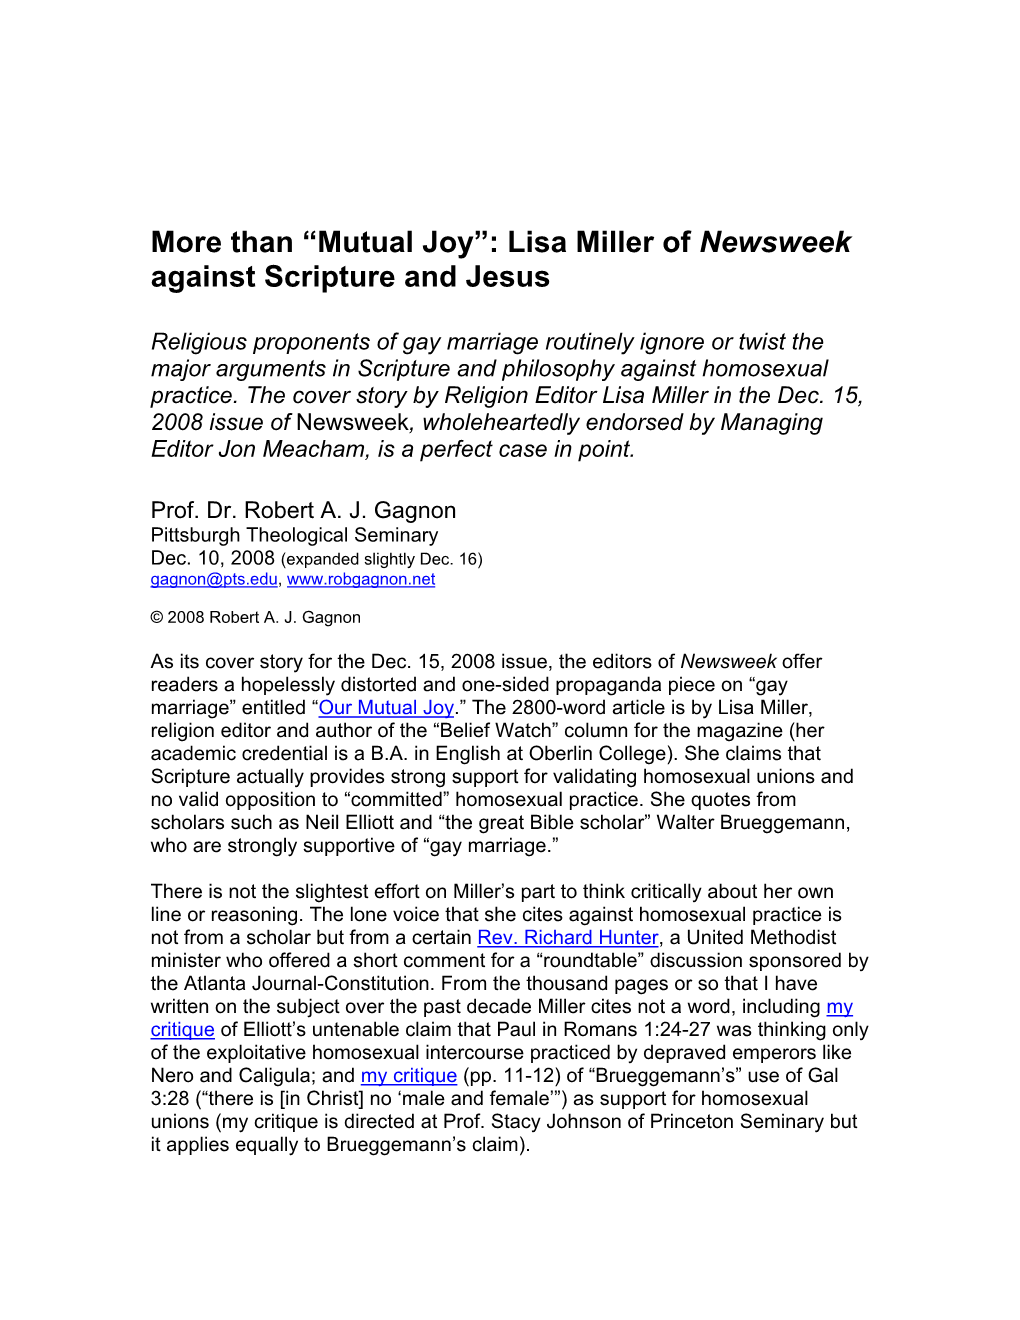 “Mutual Joy”: Lisa Miller of Newsweek Against Scripture and Jesus